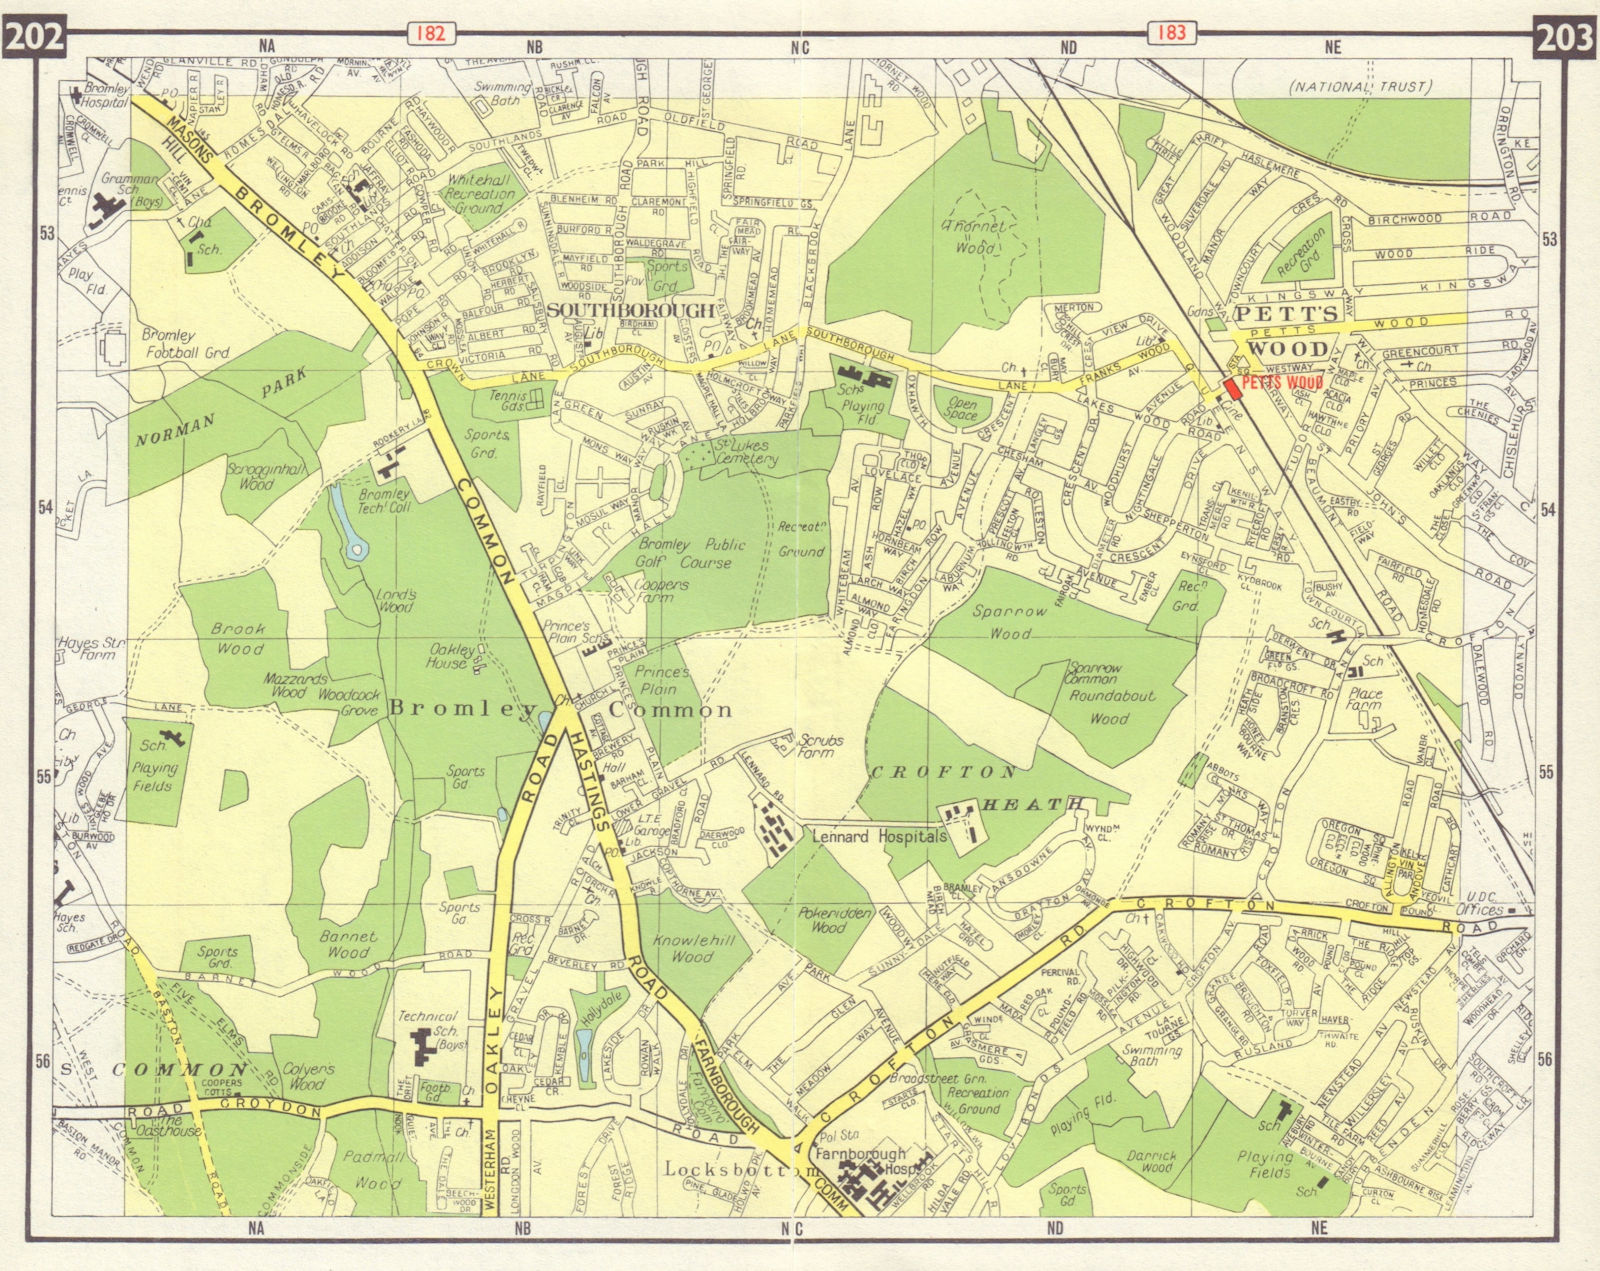 SE LONDON Petts Wood Locksbottom Southborough Bromley Common Bickley 1965 map